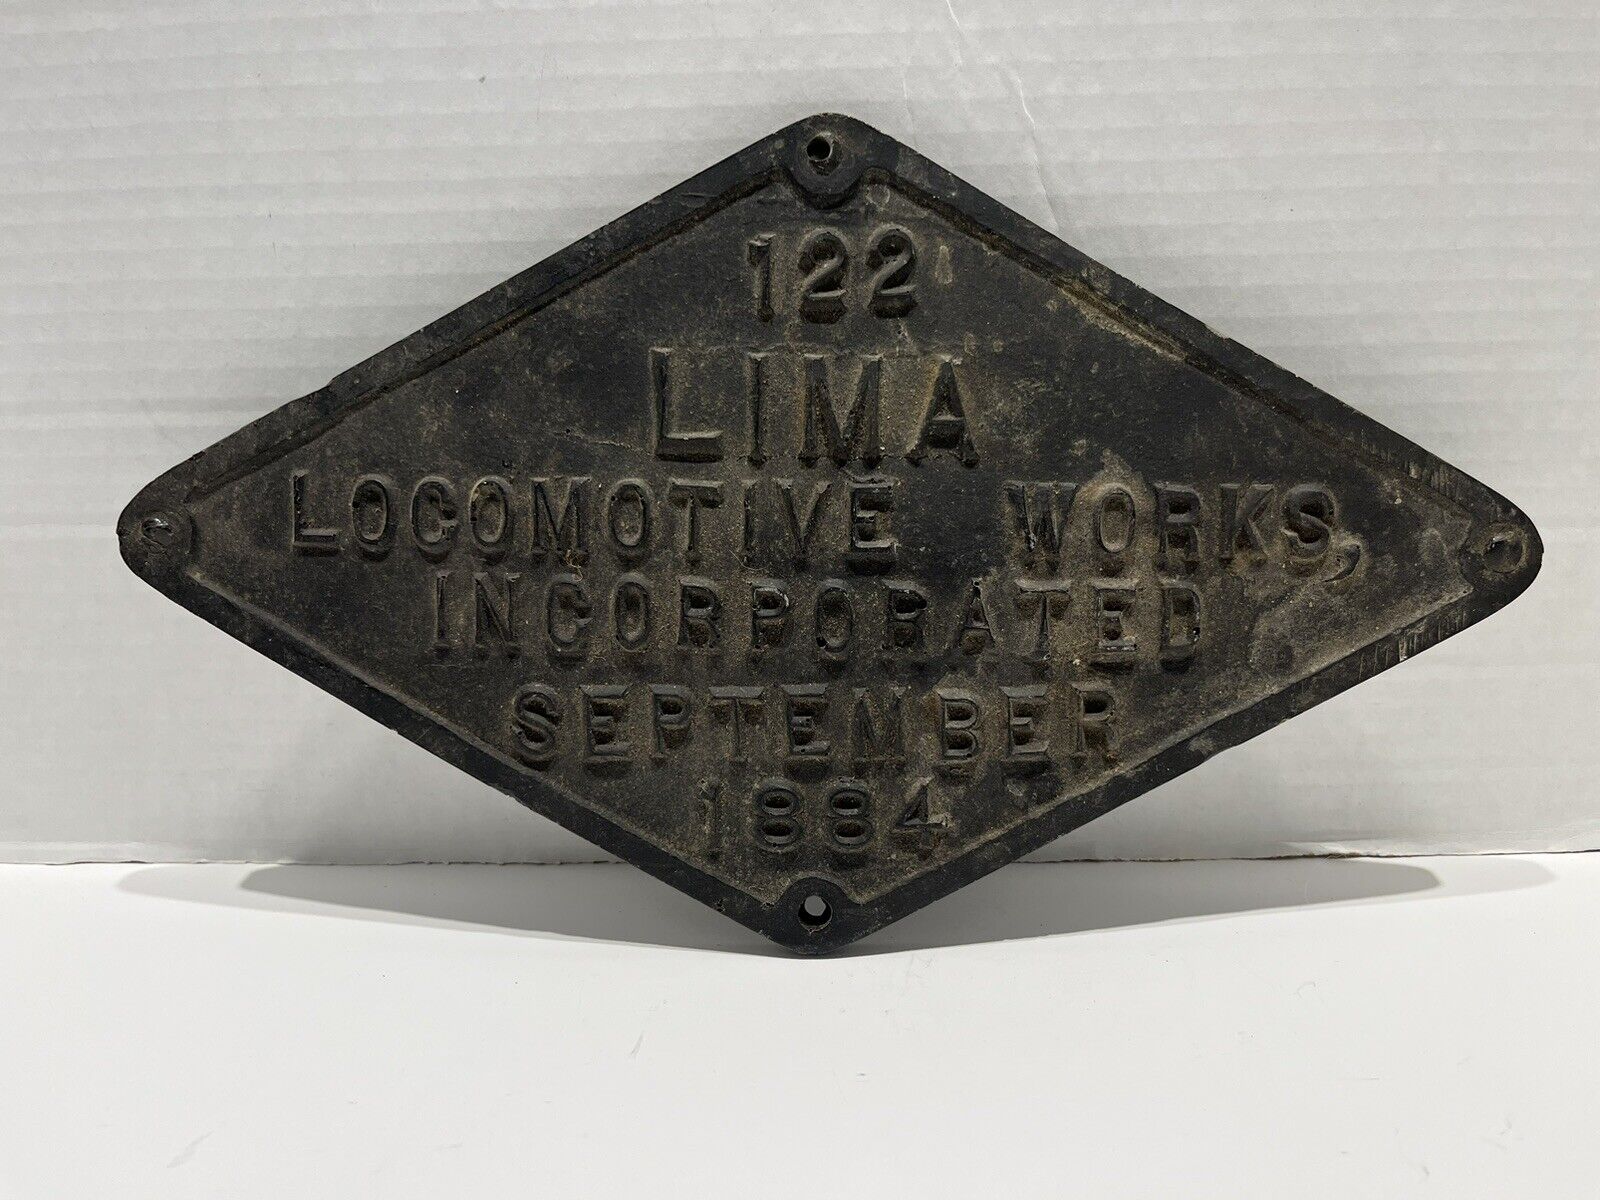 VTG Resin Walthers Repro. 122 Lima Locomotive Works INC. September 1884 Plate